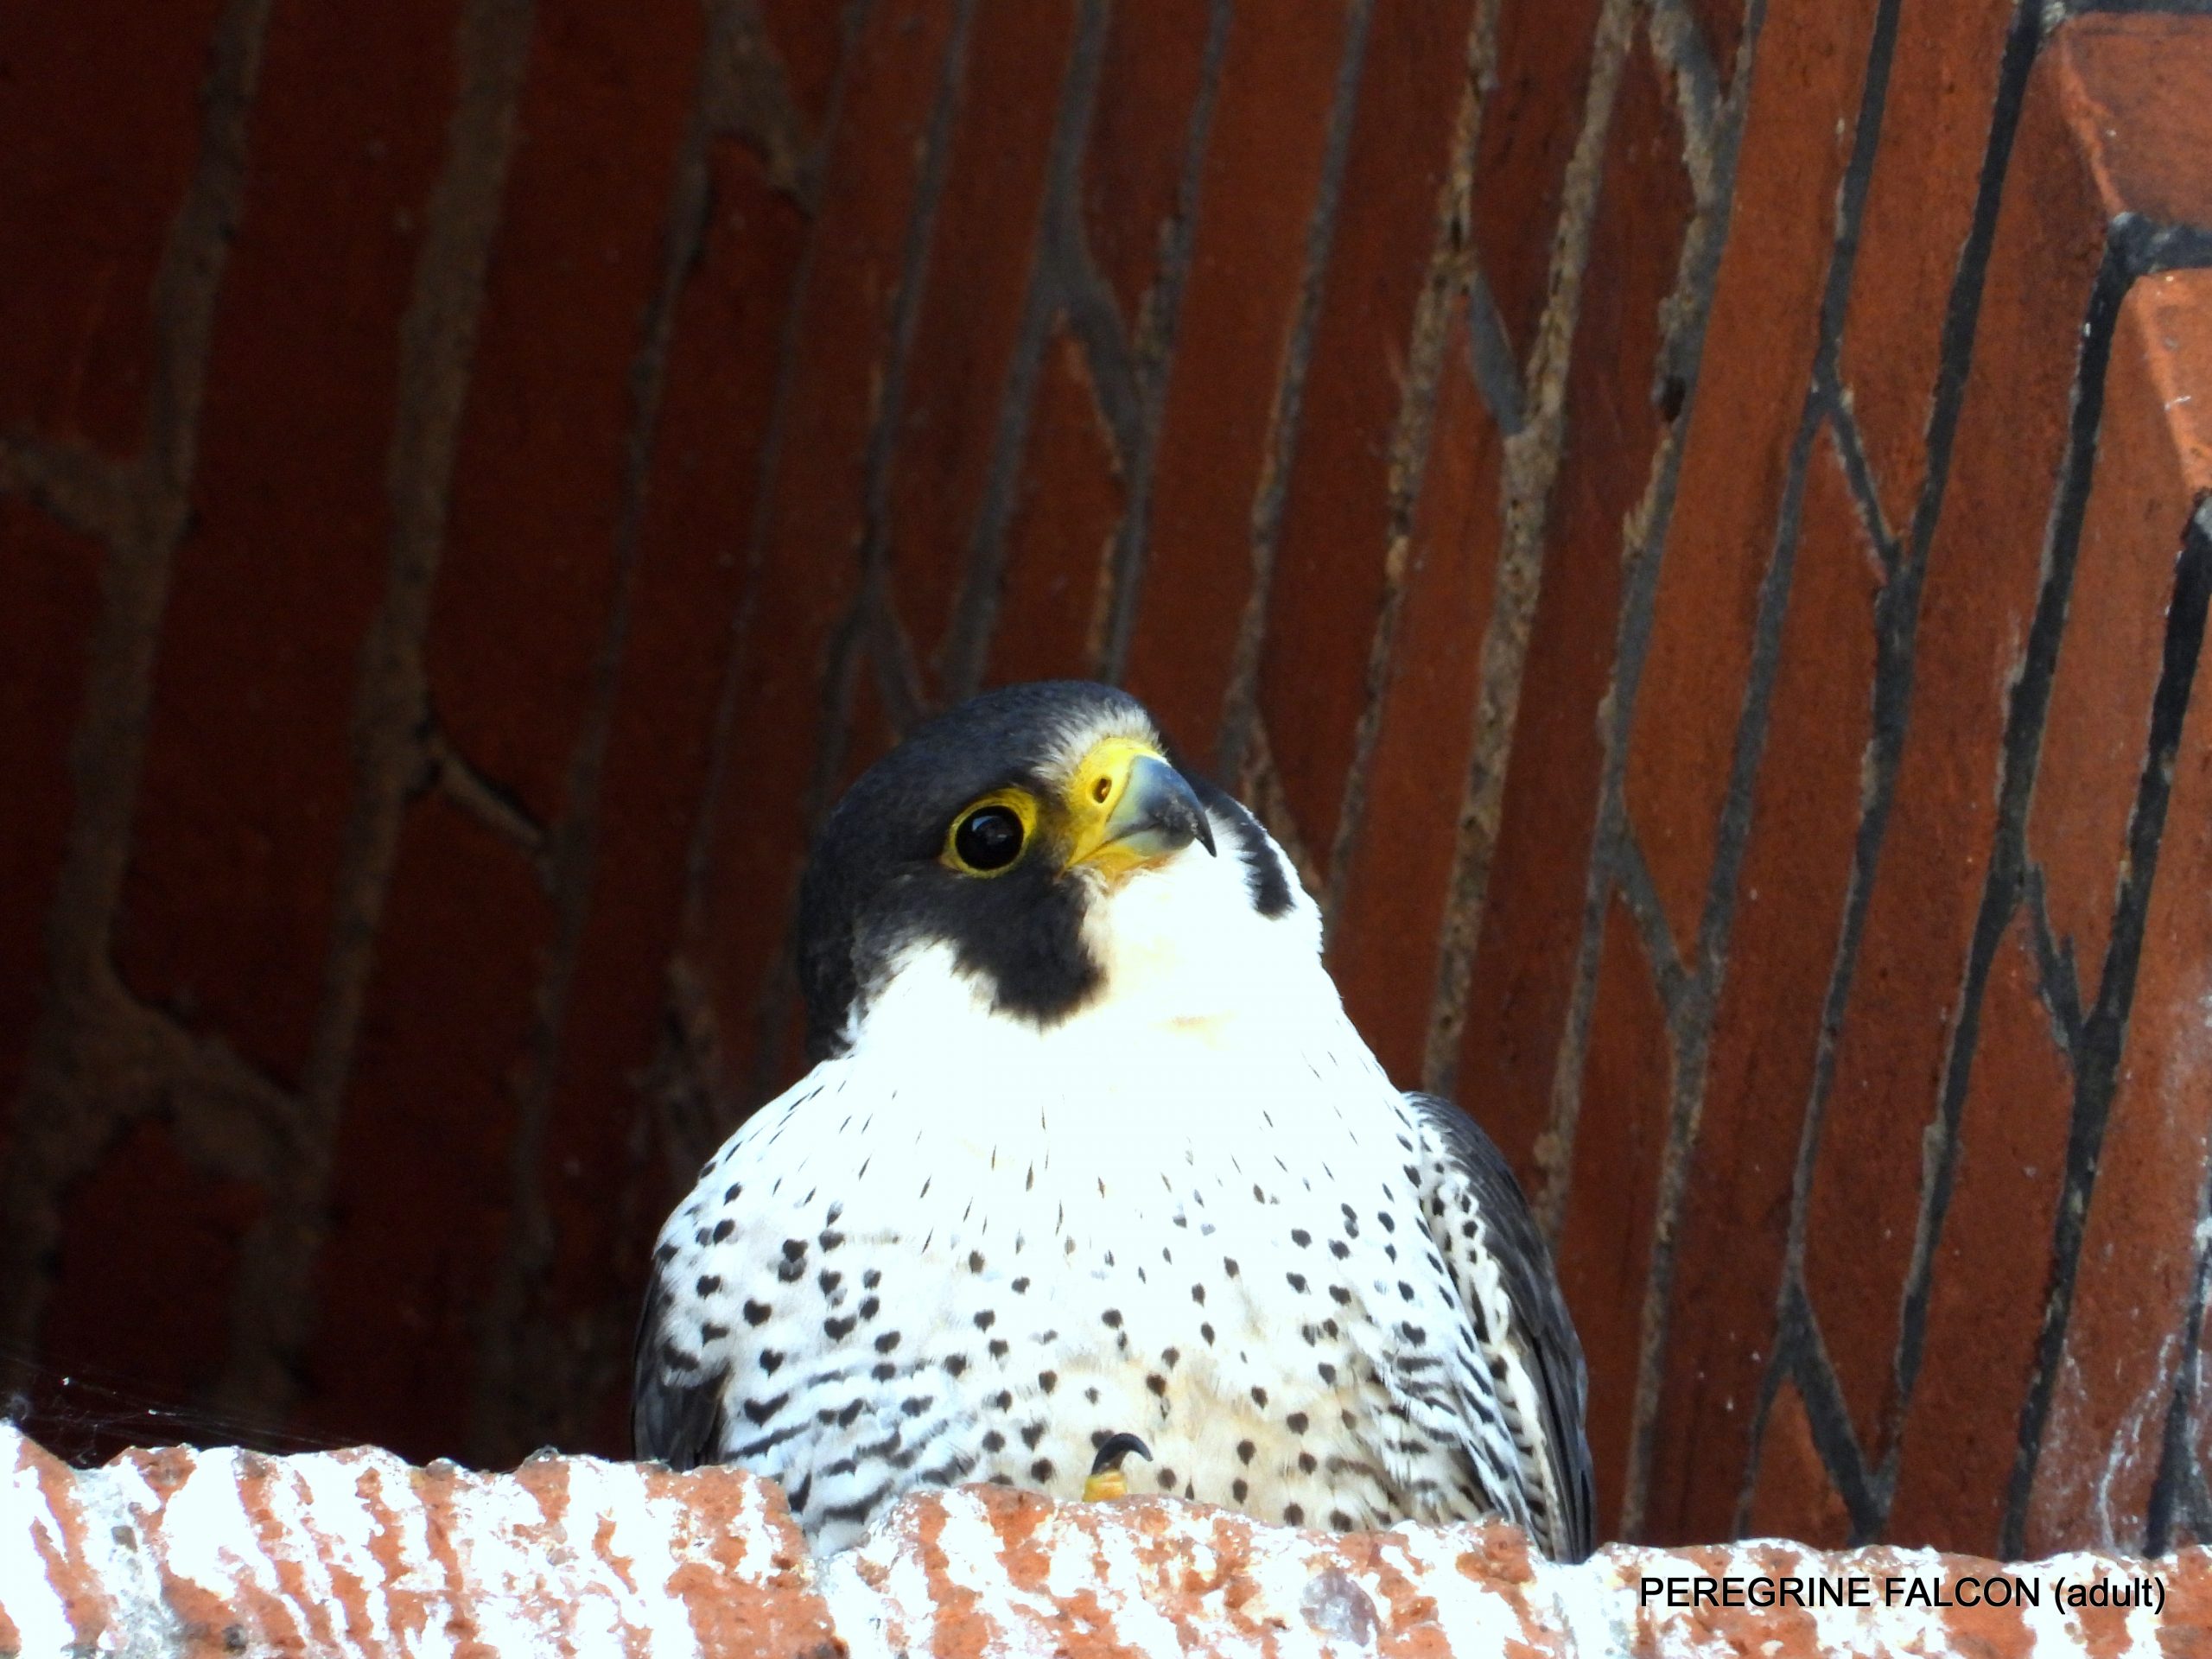 Image of a peregrine falcon.